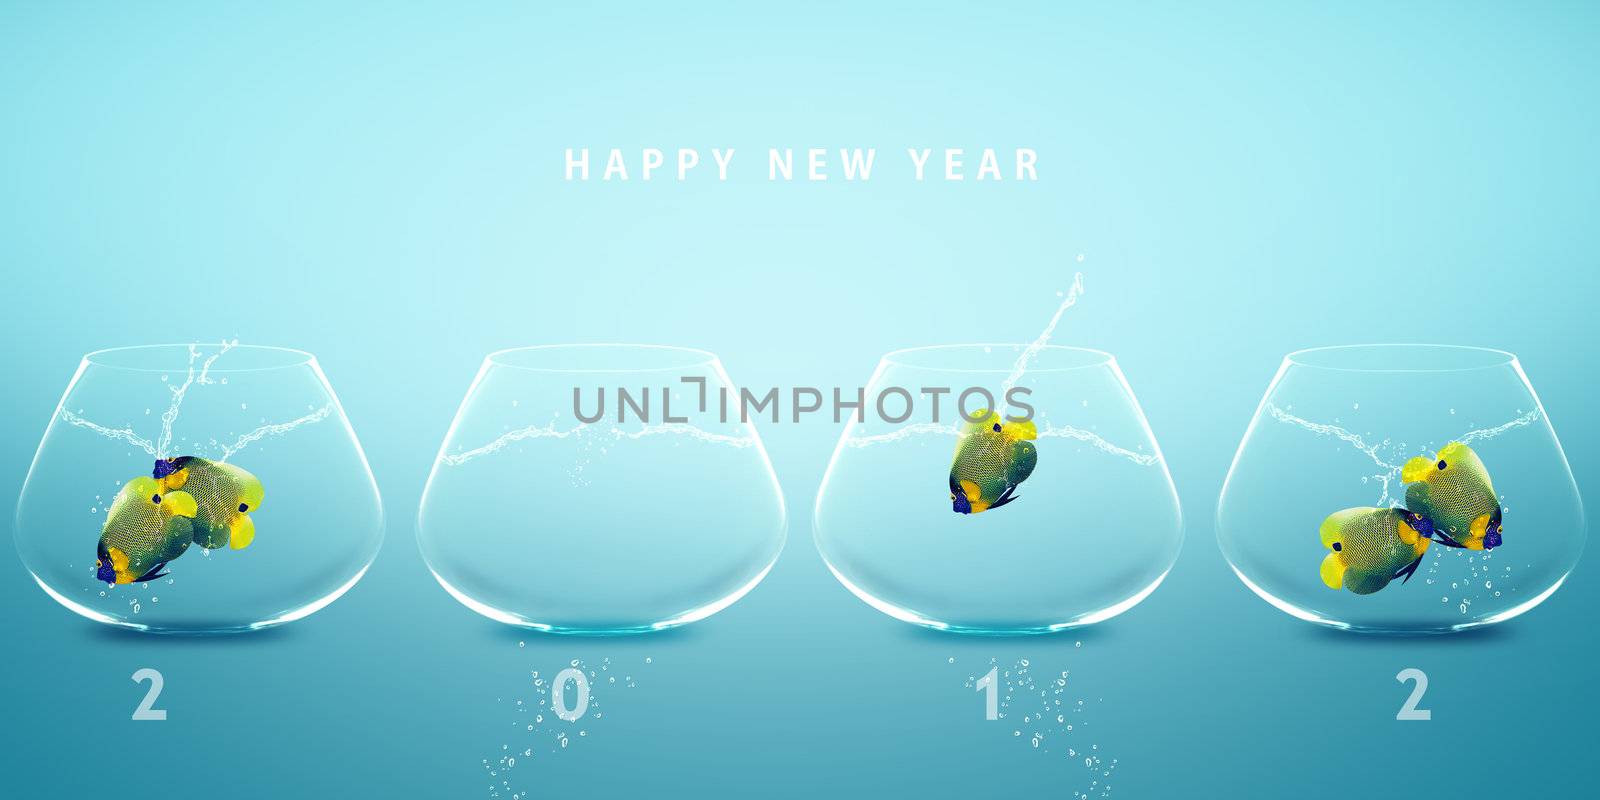 Happy new year 2012 by designsstock